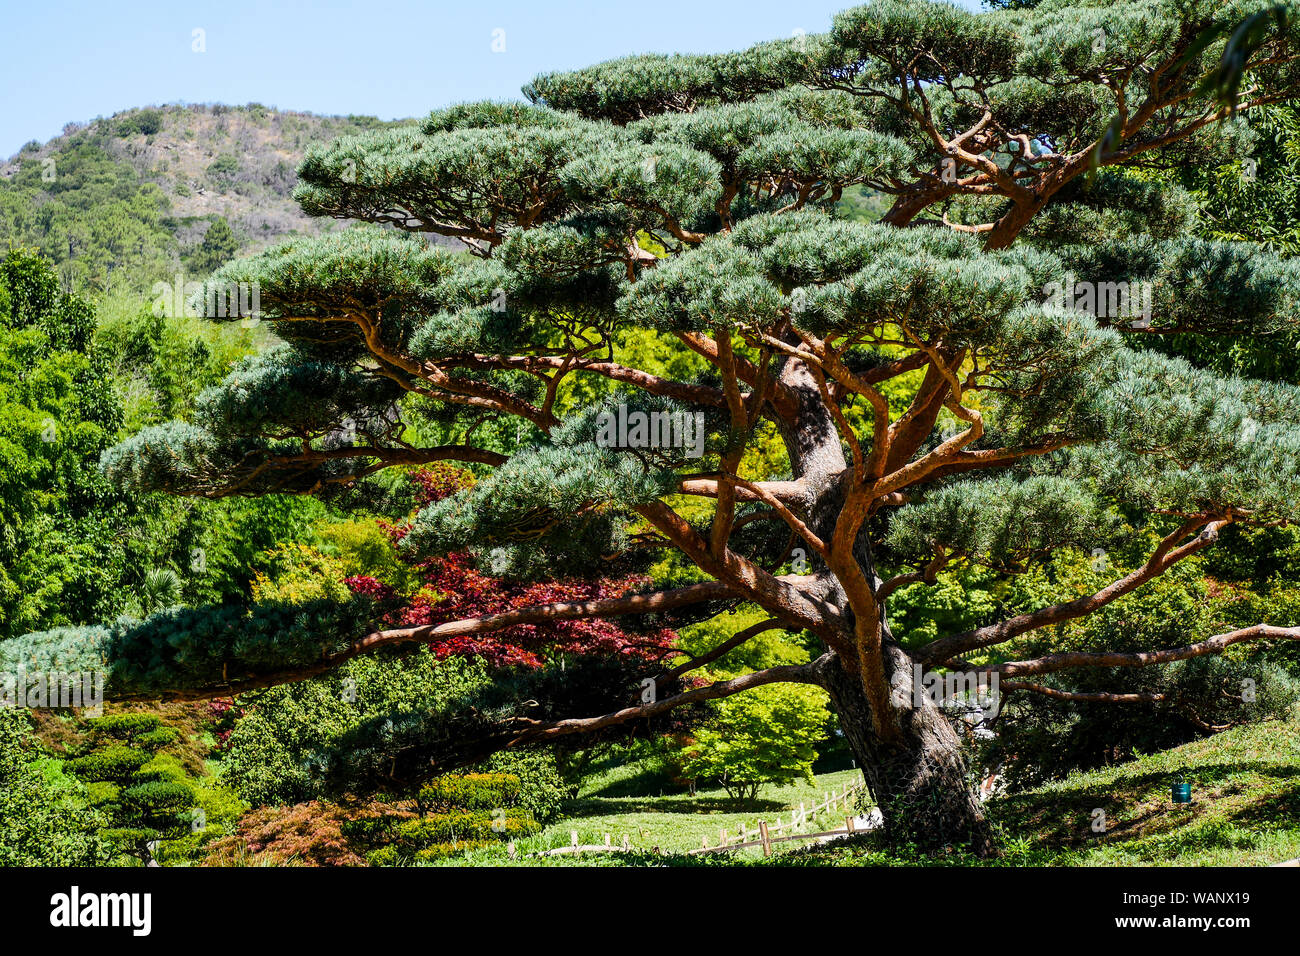 Pino silvestre - Pinus sylvestris, il giardino giapponese, la Bambouseraie - Bamboo Park, Prafrance, Anduze, Gard, Francia Foto Stock